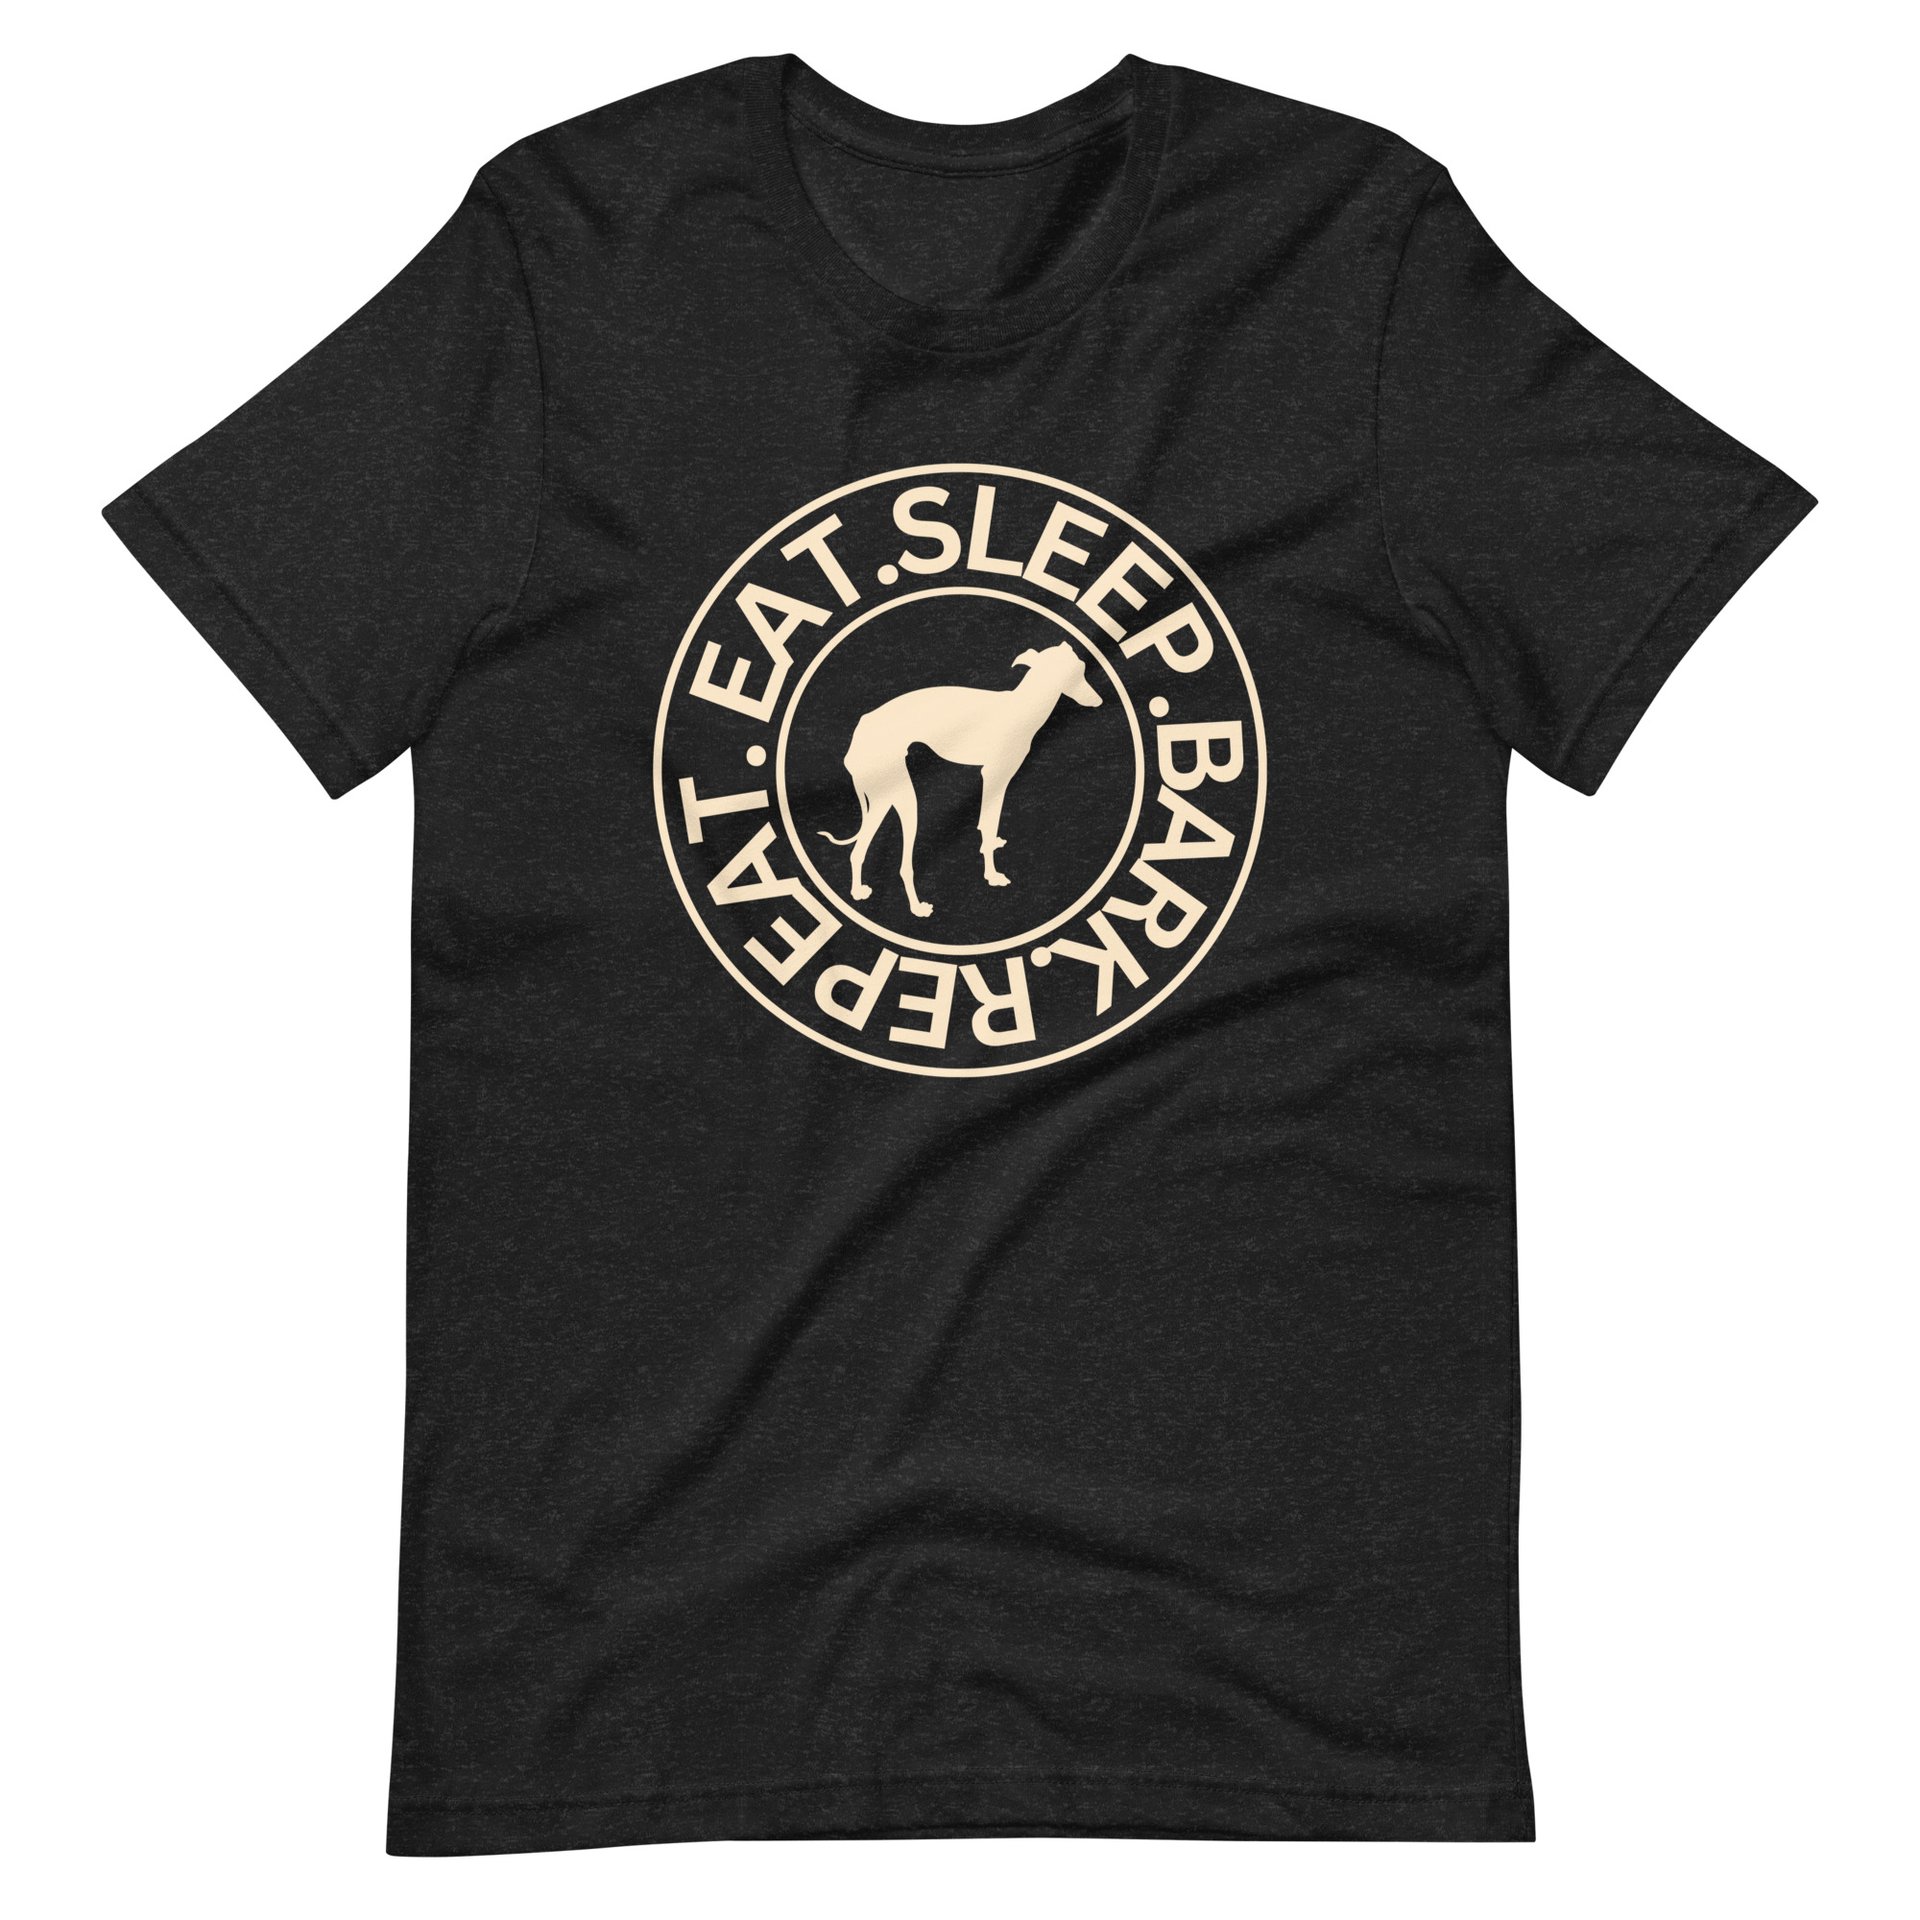 Eat Sleep Bark Repeat Italian Greyhound Unisex T-Shirt. Black HEather